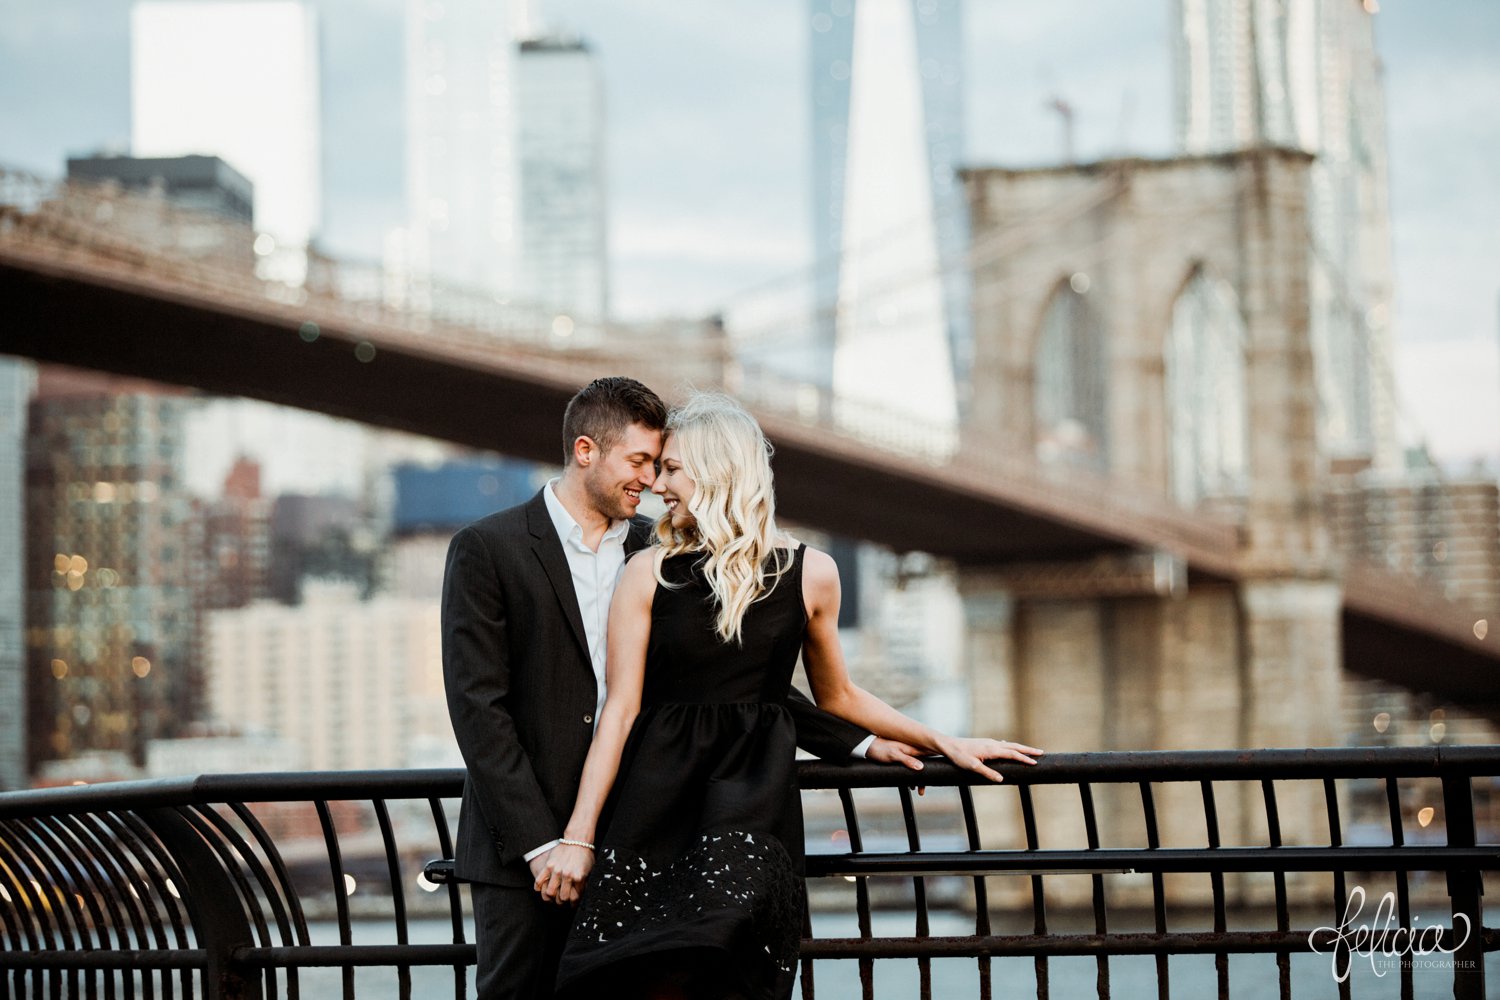 images by feliciathephotographer.com | destination wedding photographer | engagement | new york city | brooklyn bridge | skyline | formal | classic | true love | romantic |